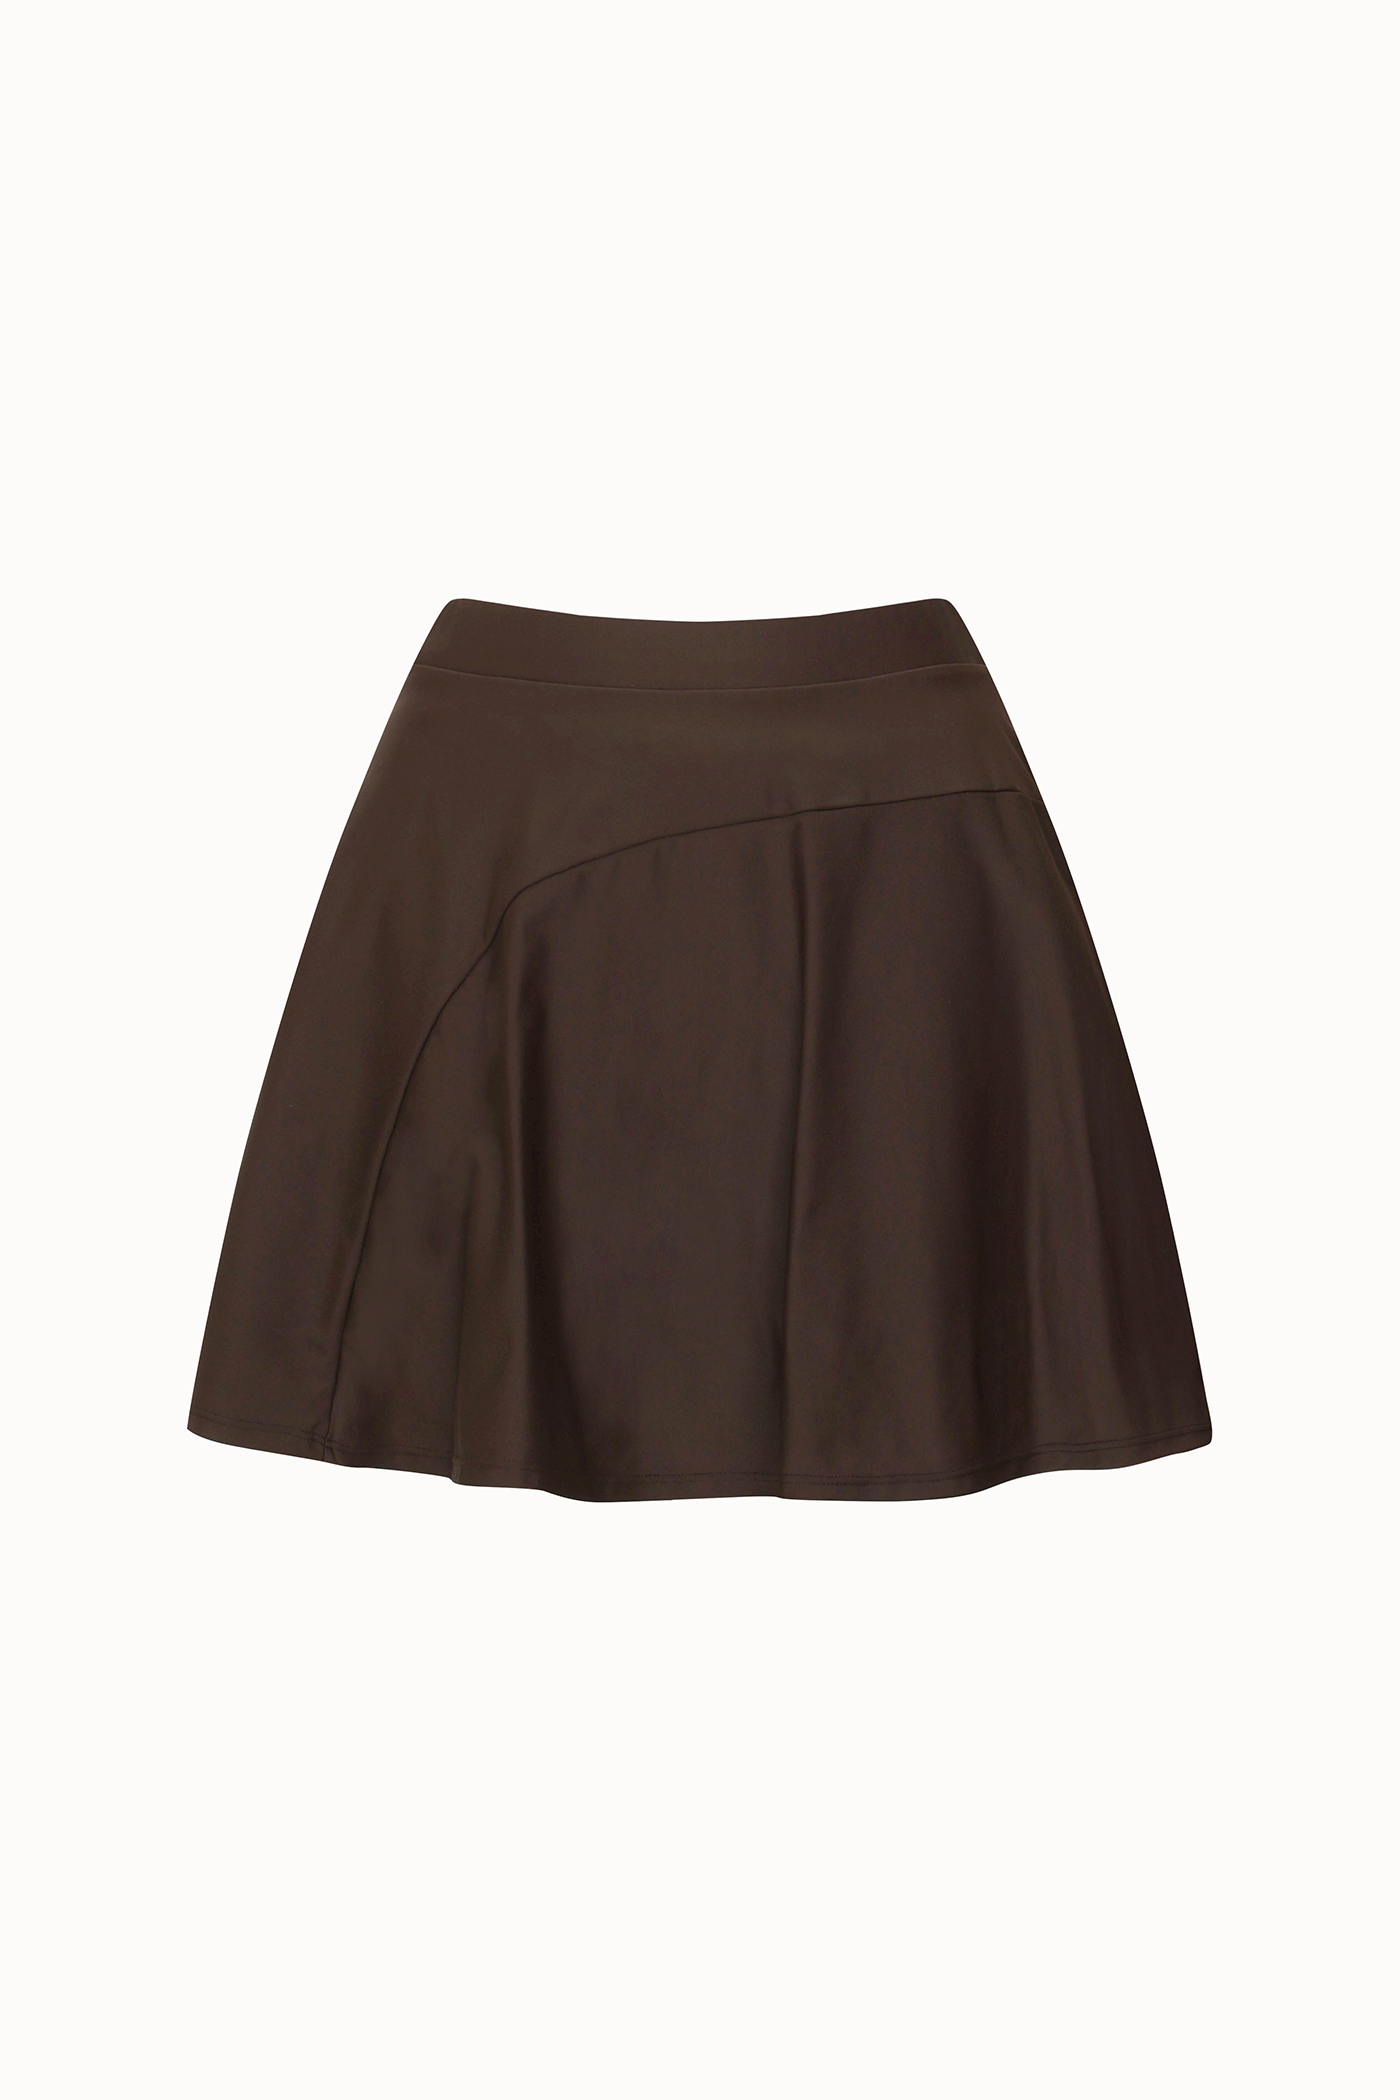 Cutting Line Flare Skirt[LMBDSW233]-Chocolate Brown